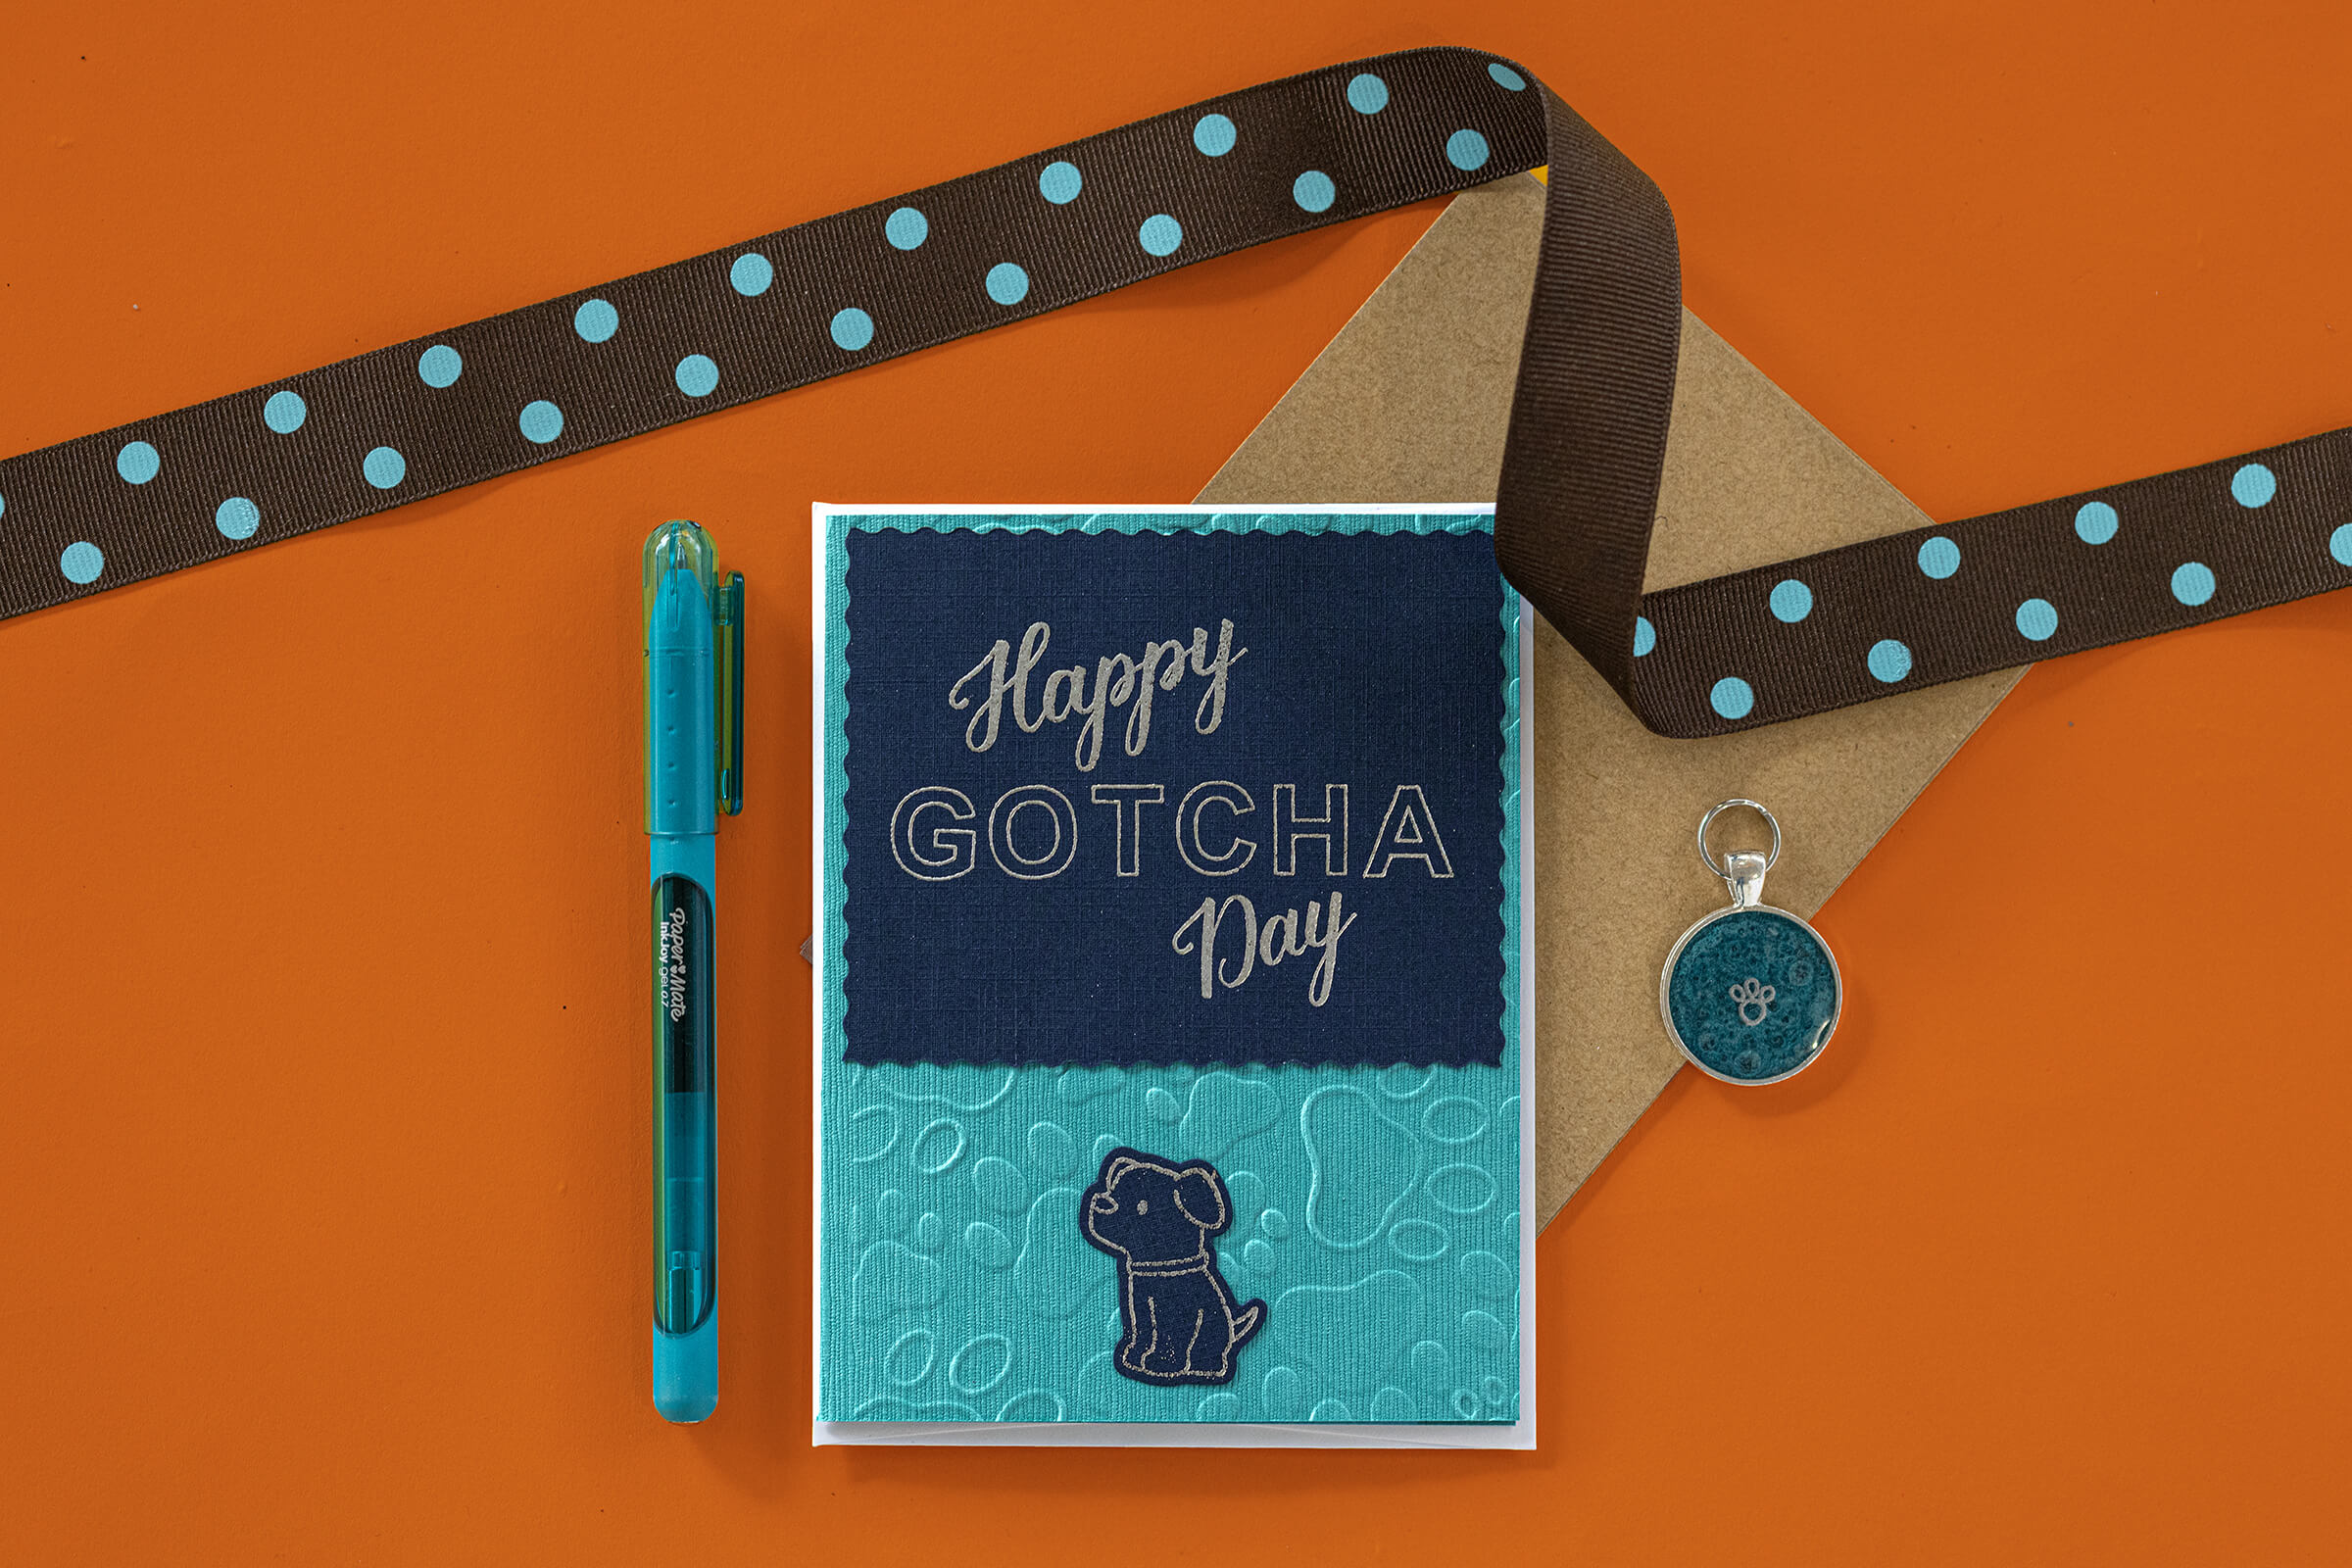 Happy Gotcha Day card with dog collar charm